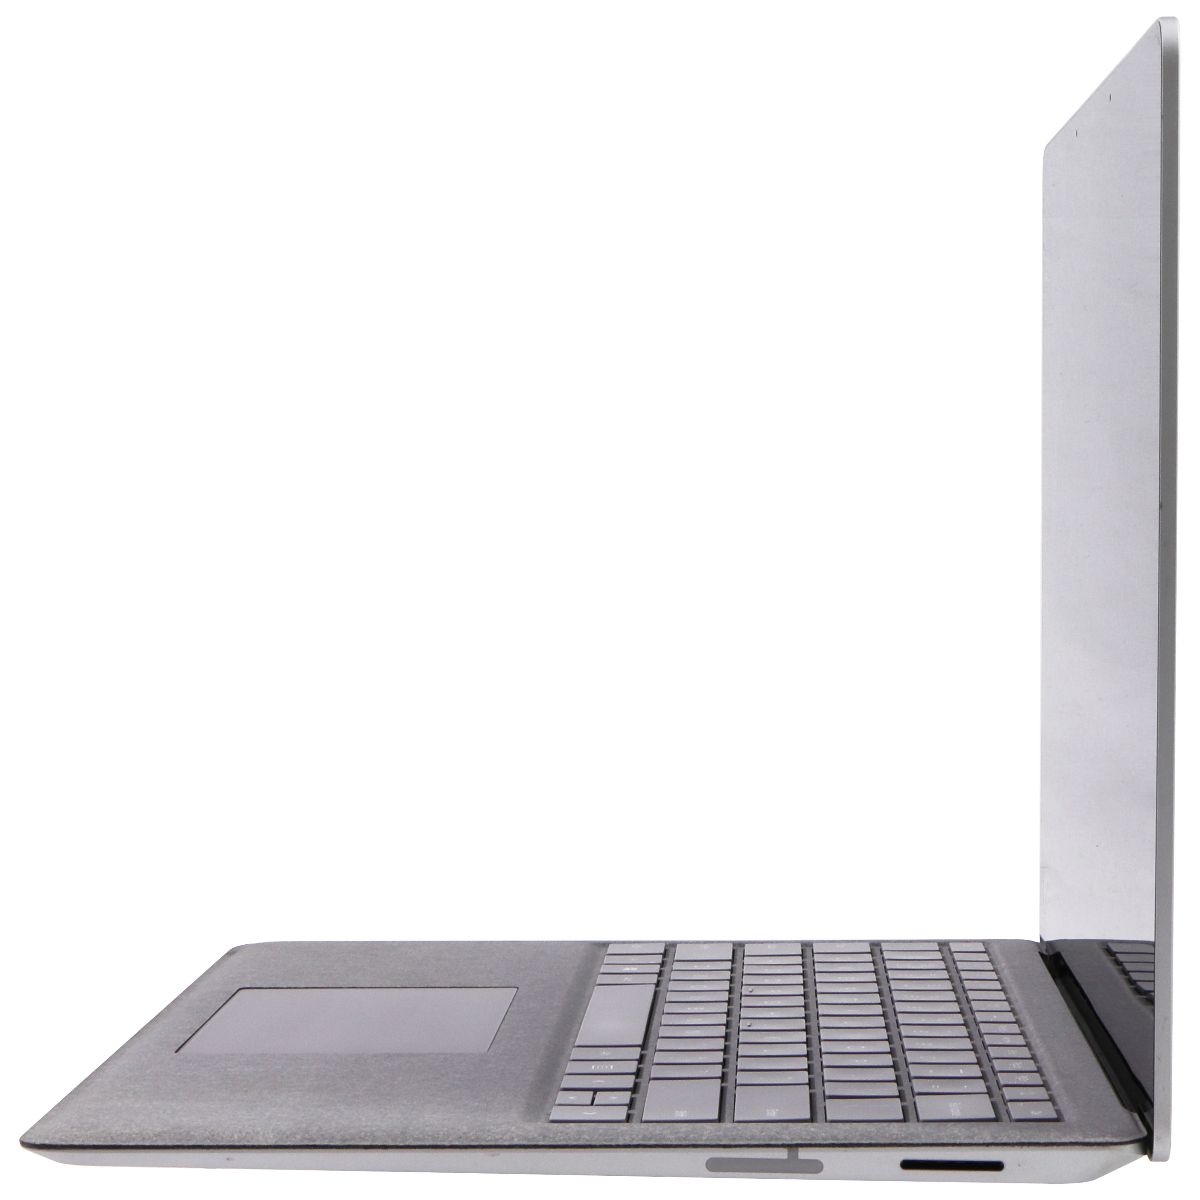 Microsoft Surface Laptop 2 (1769) 13.5-in (i5-8350U / 128GB SSD / 8GB) Laptops - PC Laptops & Netbooks Microsoft    - Simple Cell Bulk Wholesale Pricing - USA Seller